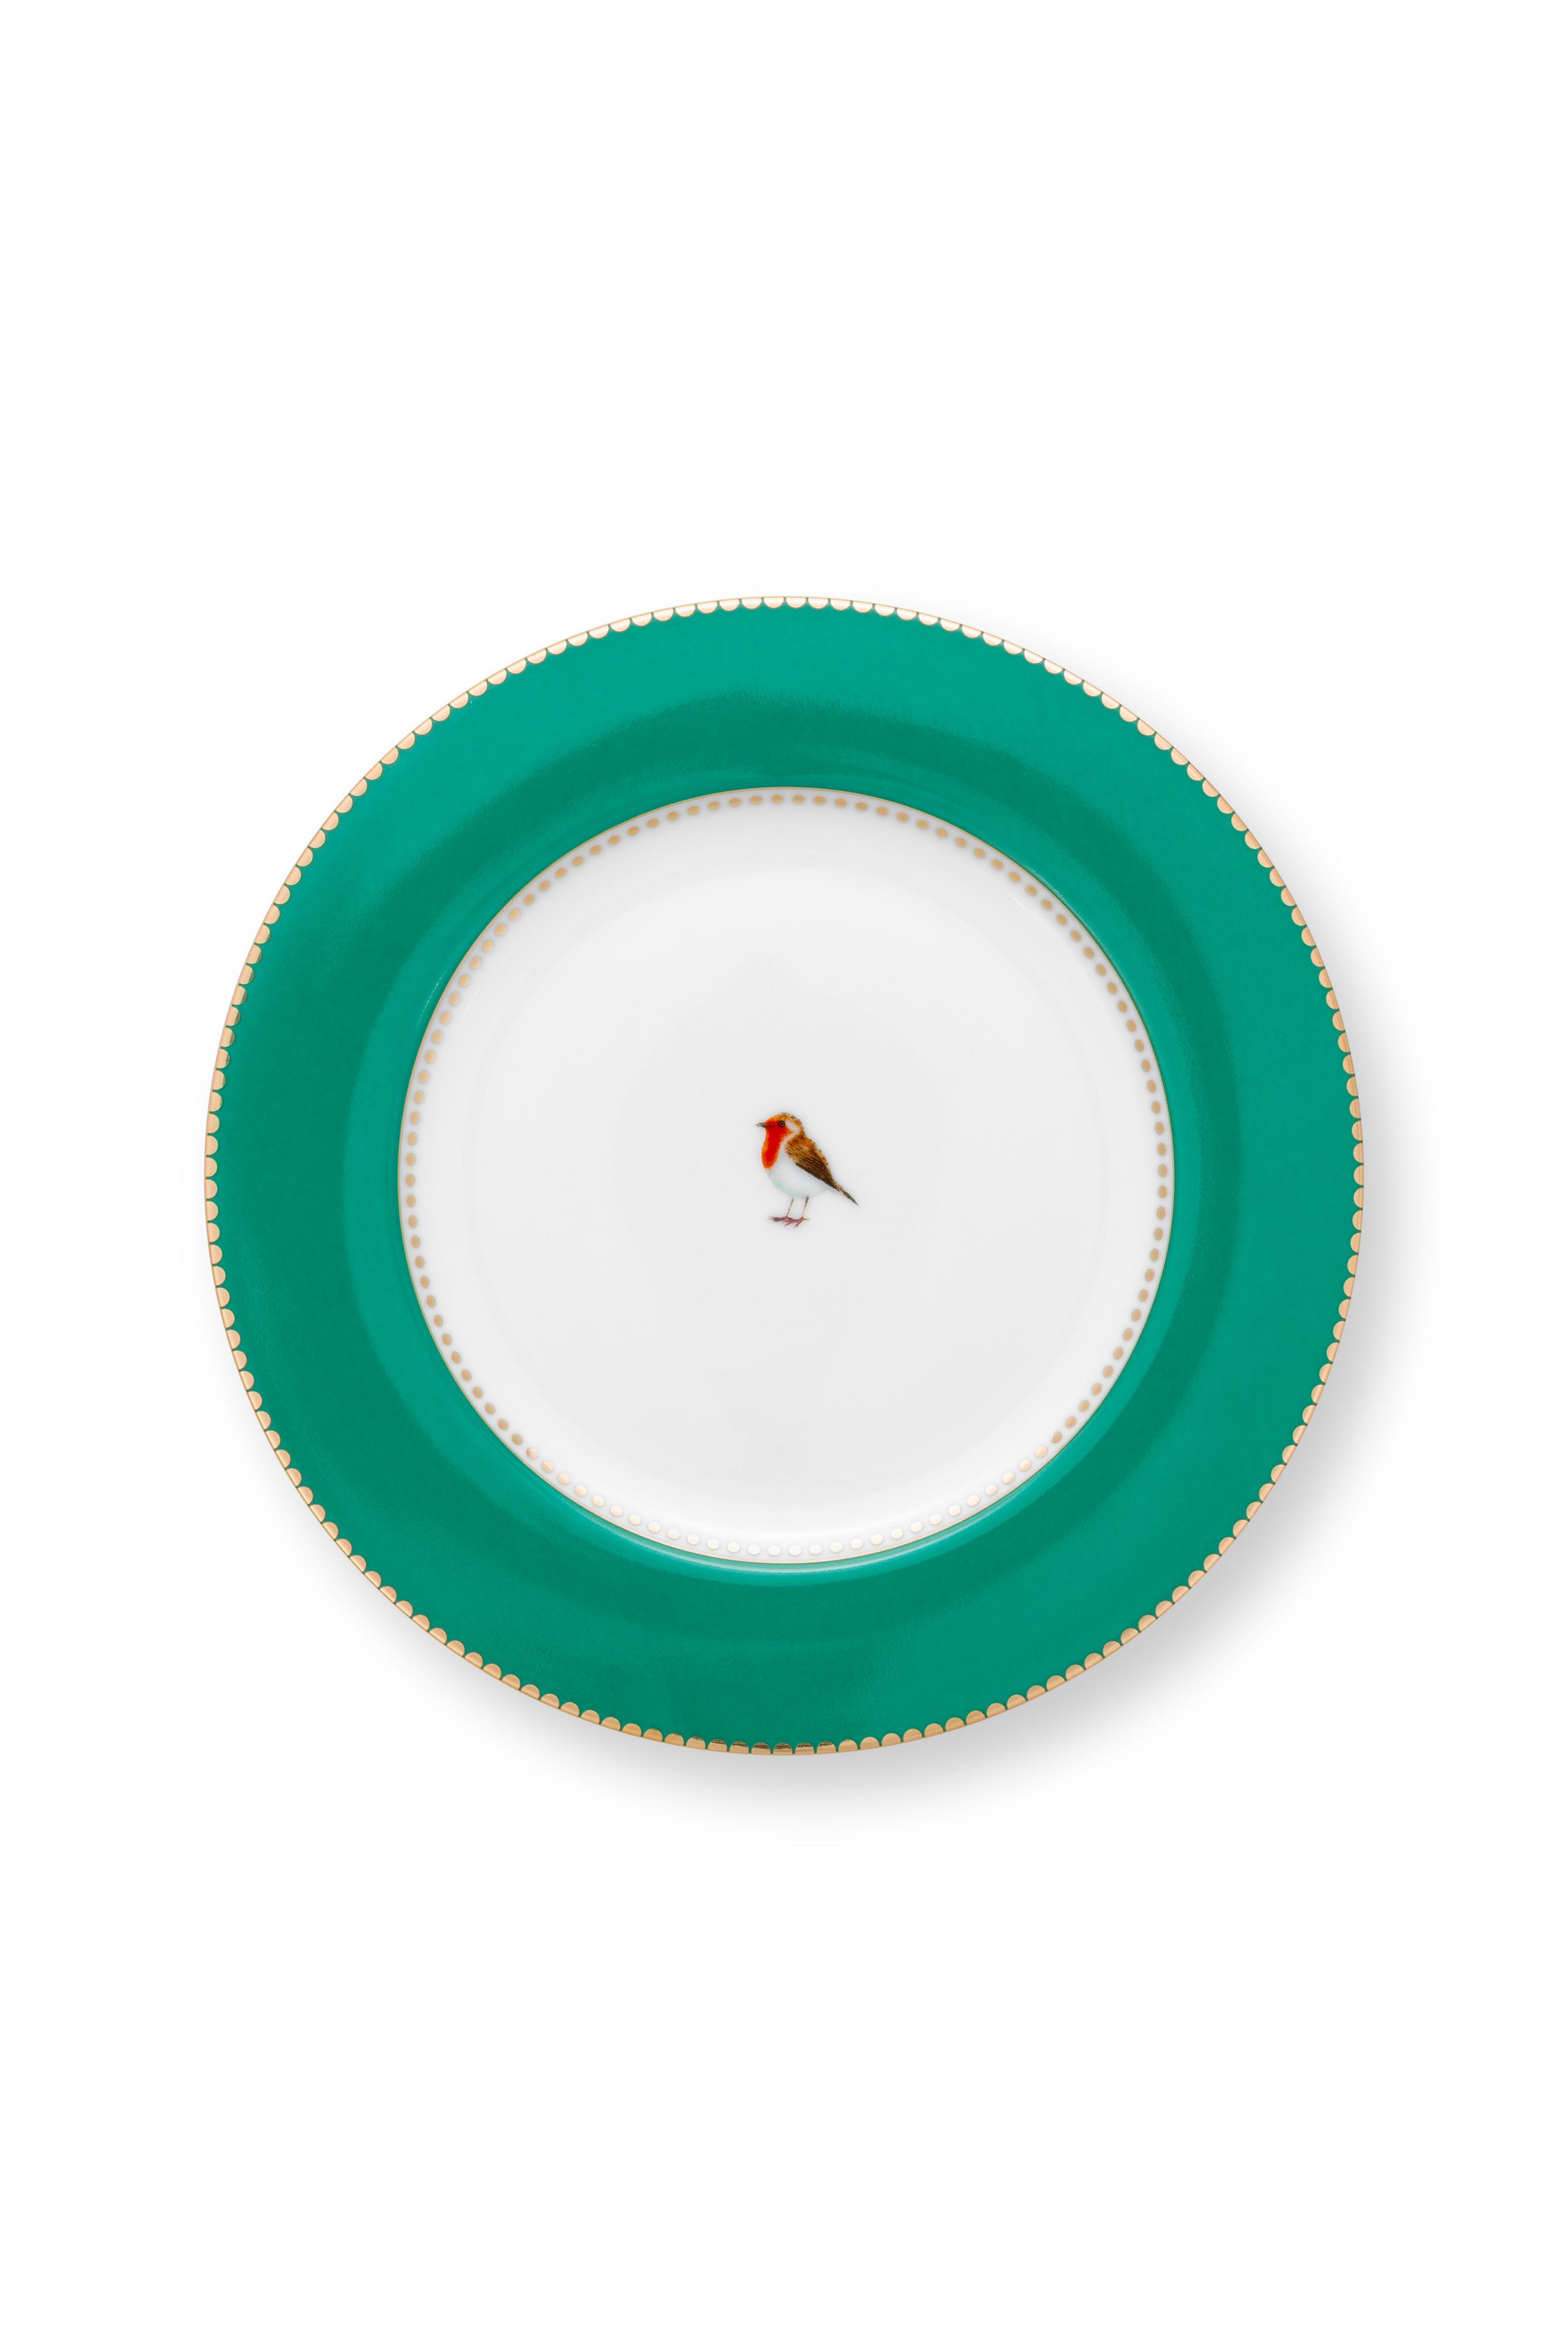 Plate Love Birds Emerald 17cm Gift